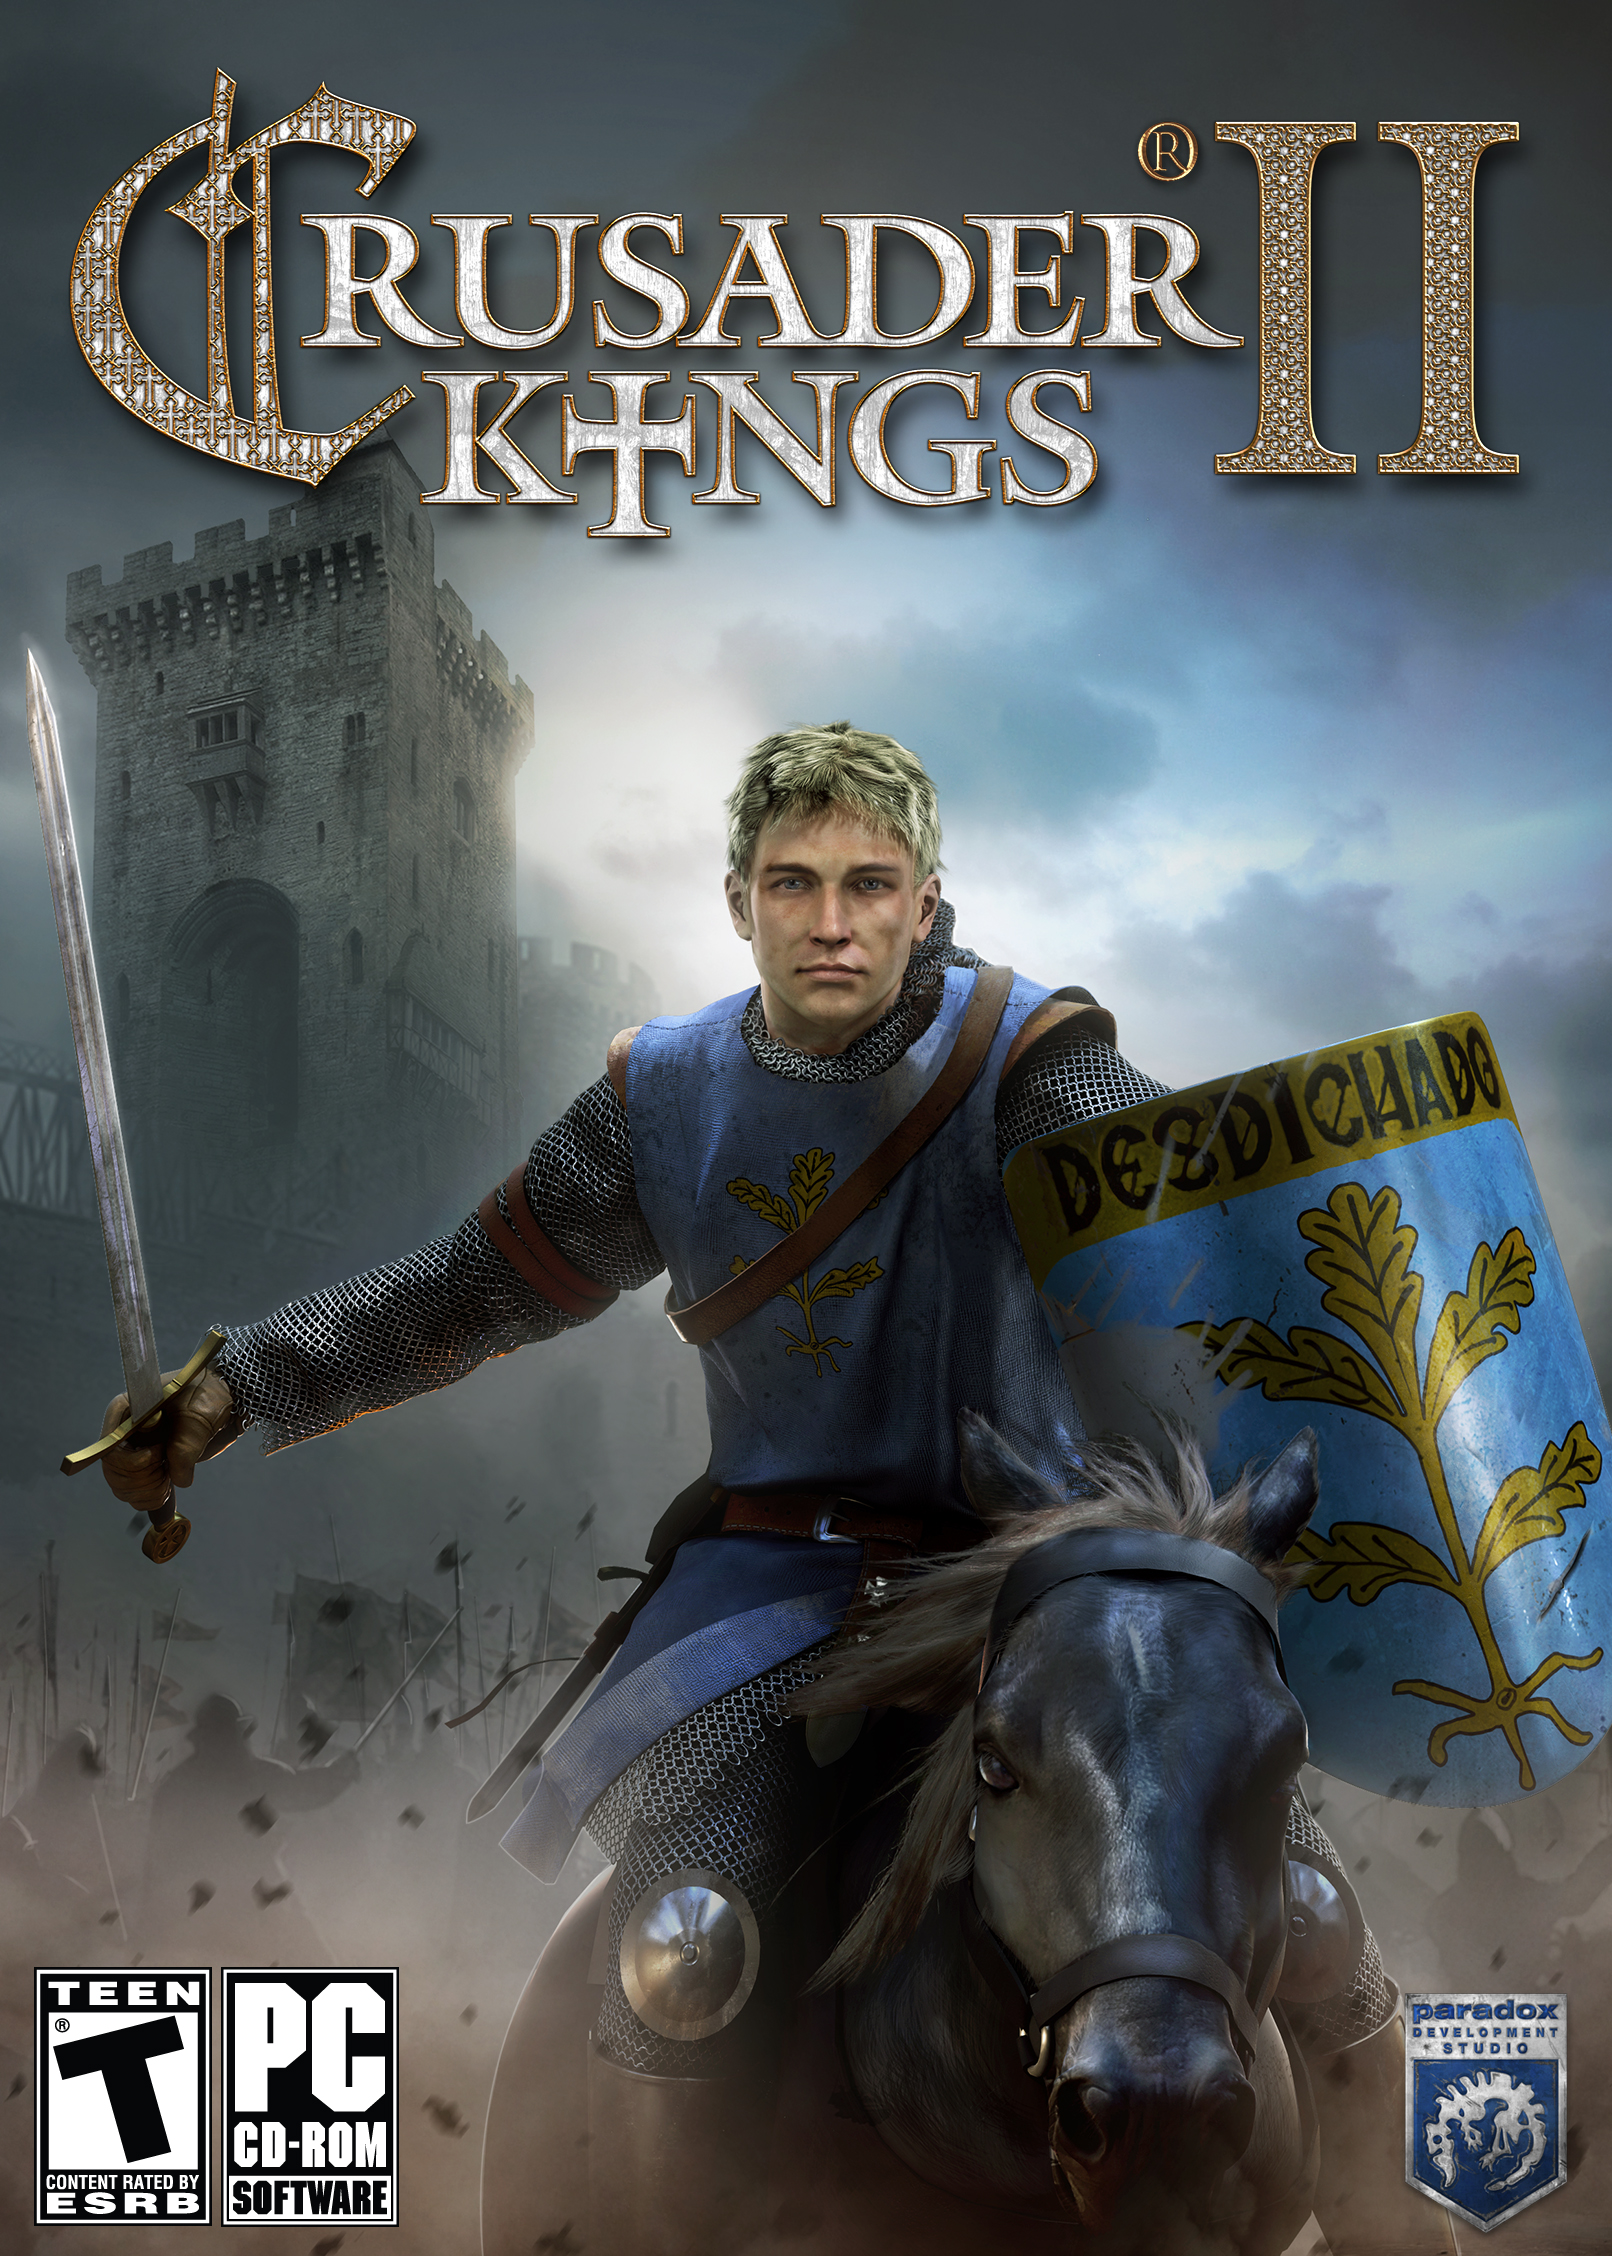 crusader kings 3 ps5 release date